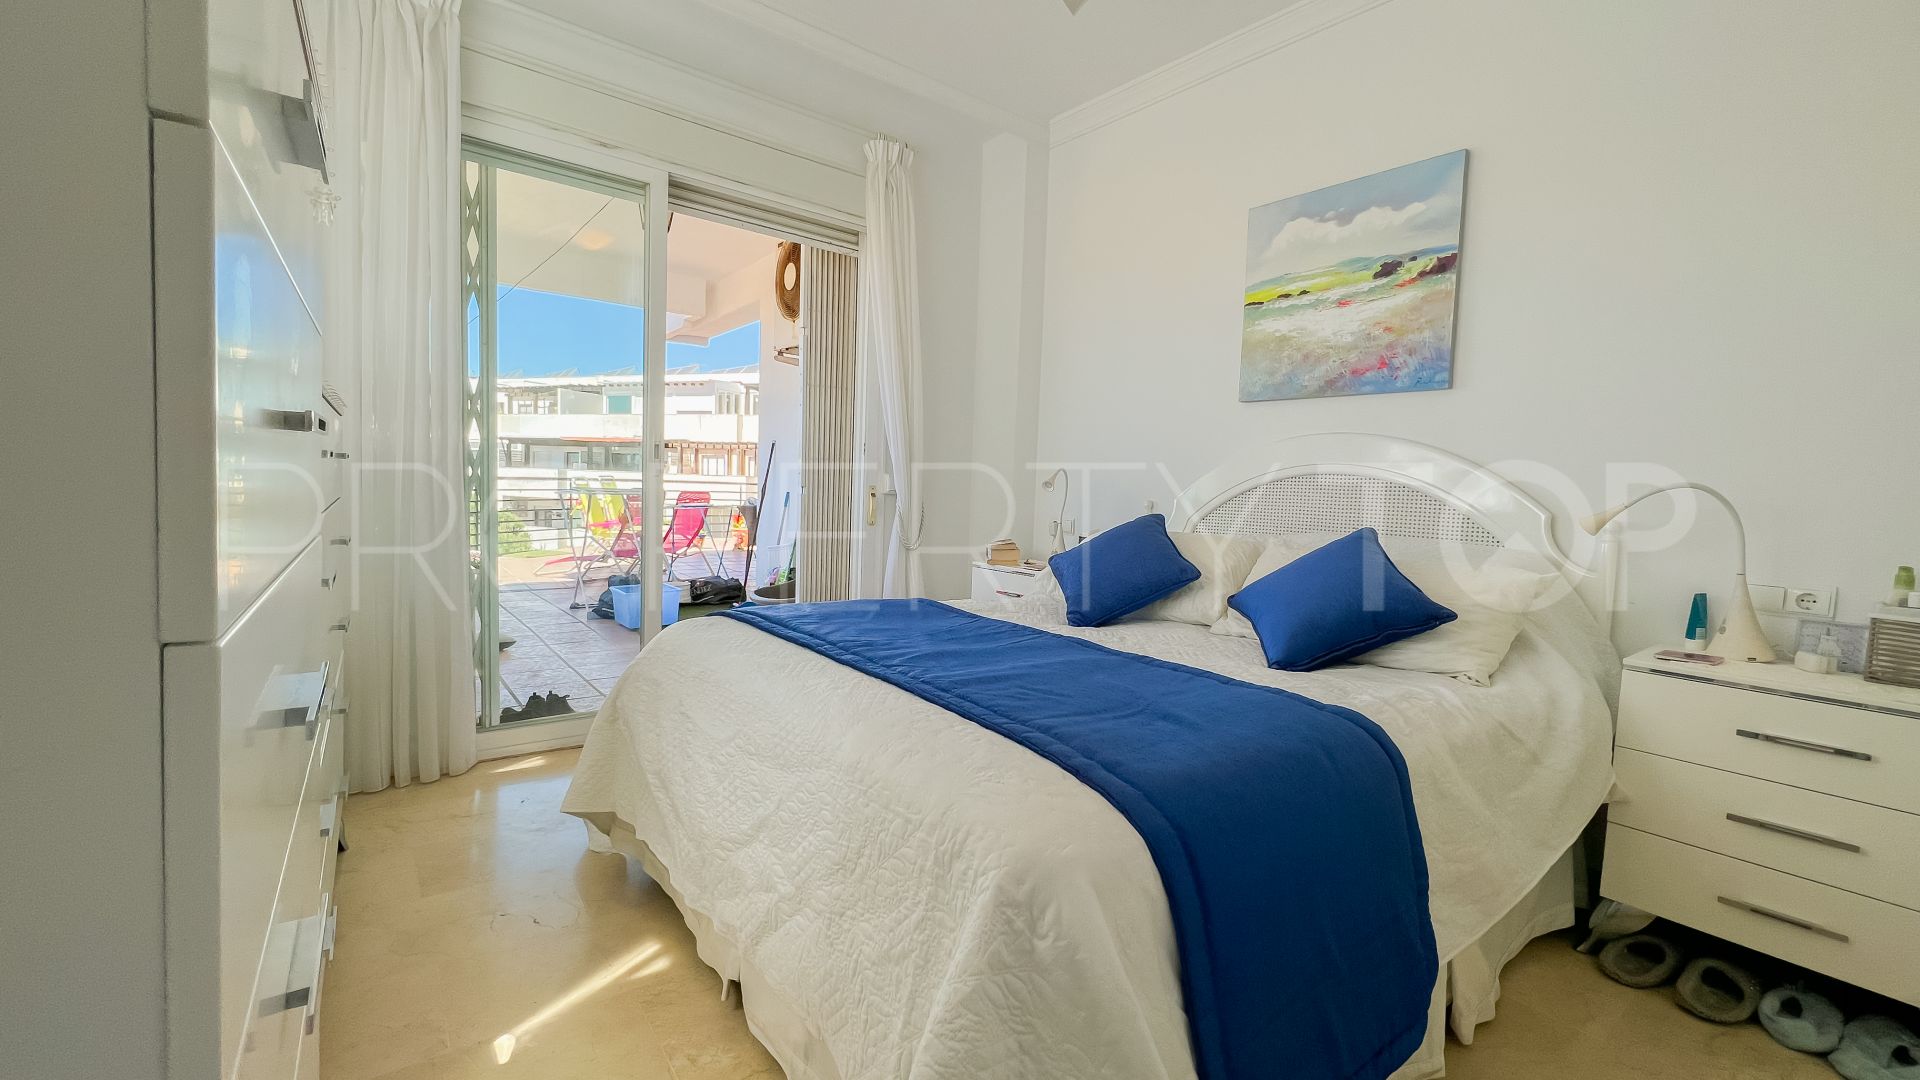 Riviera del Sol 3 bedrooms ground floor apartment for sale